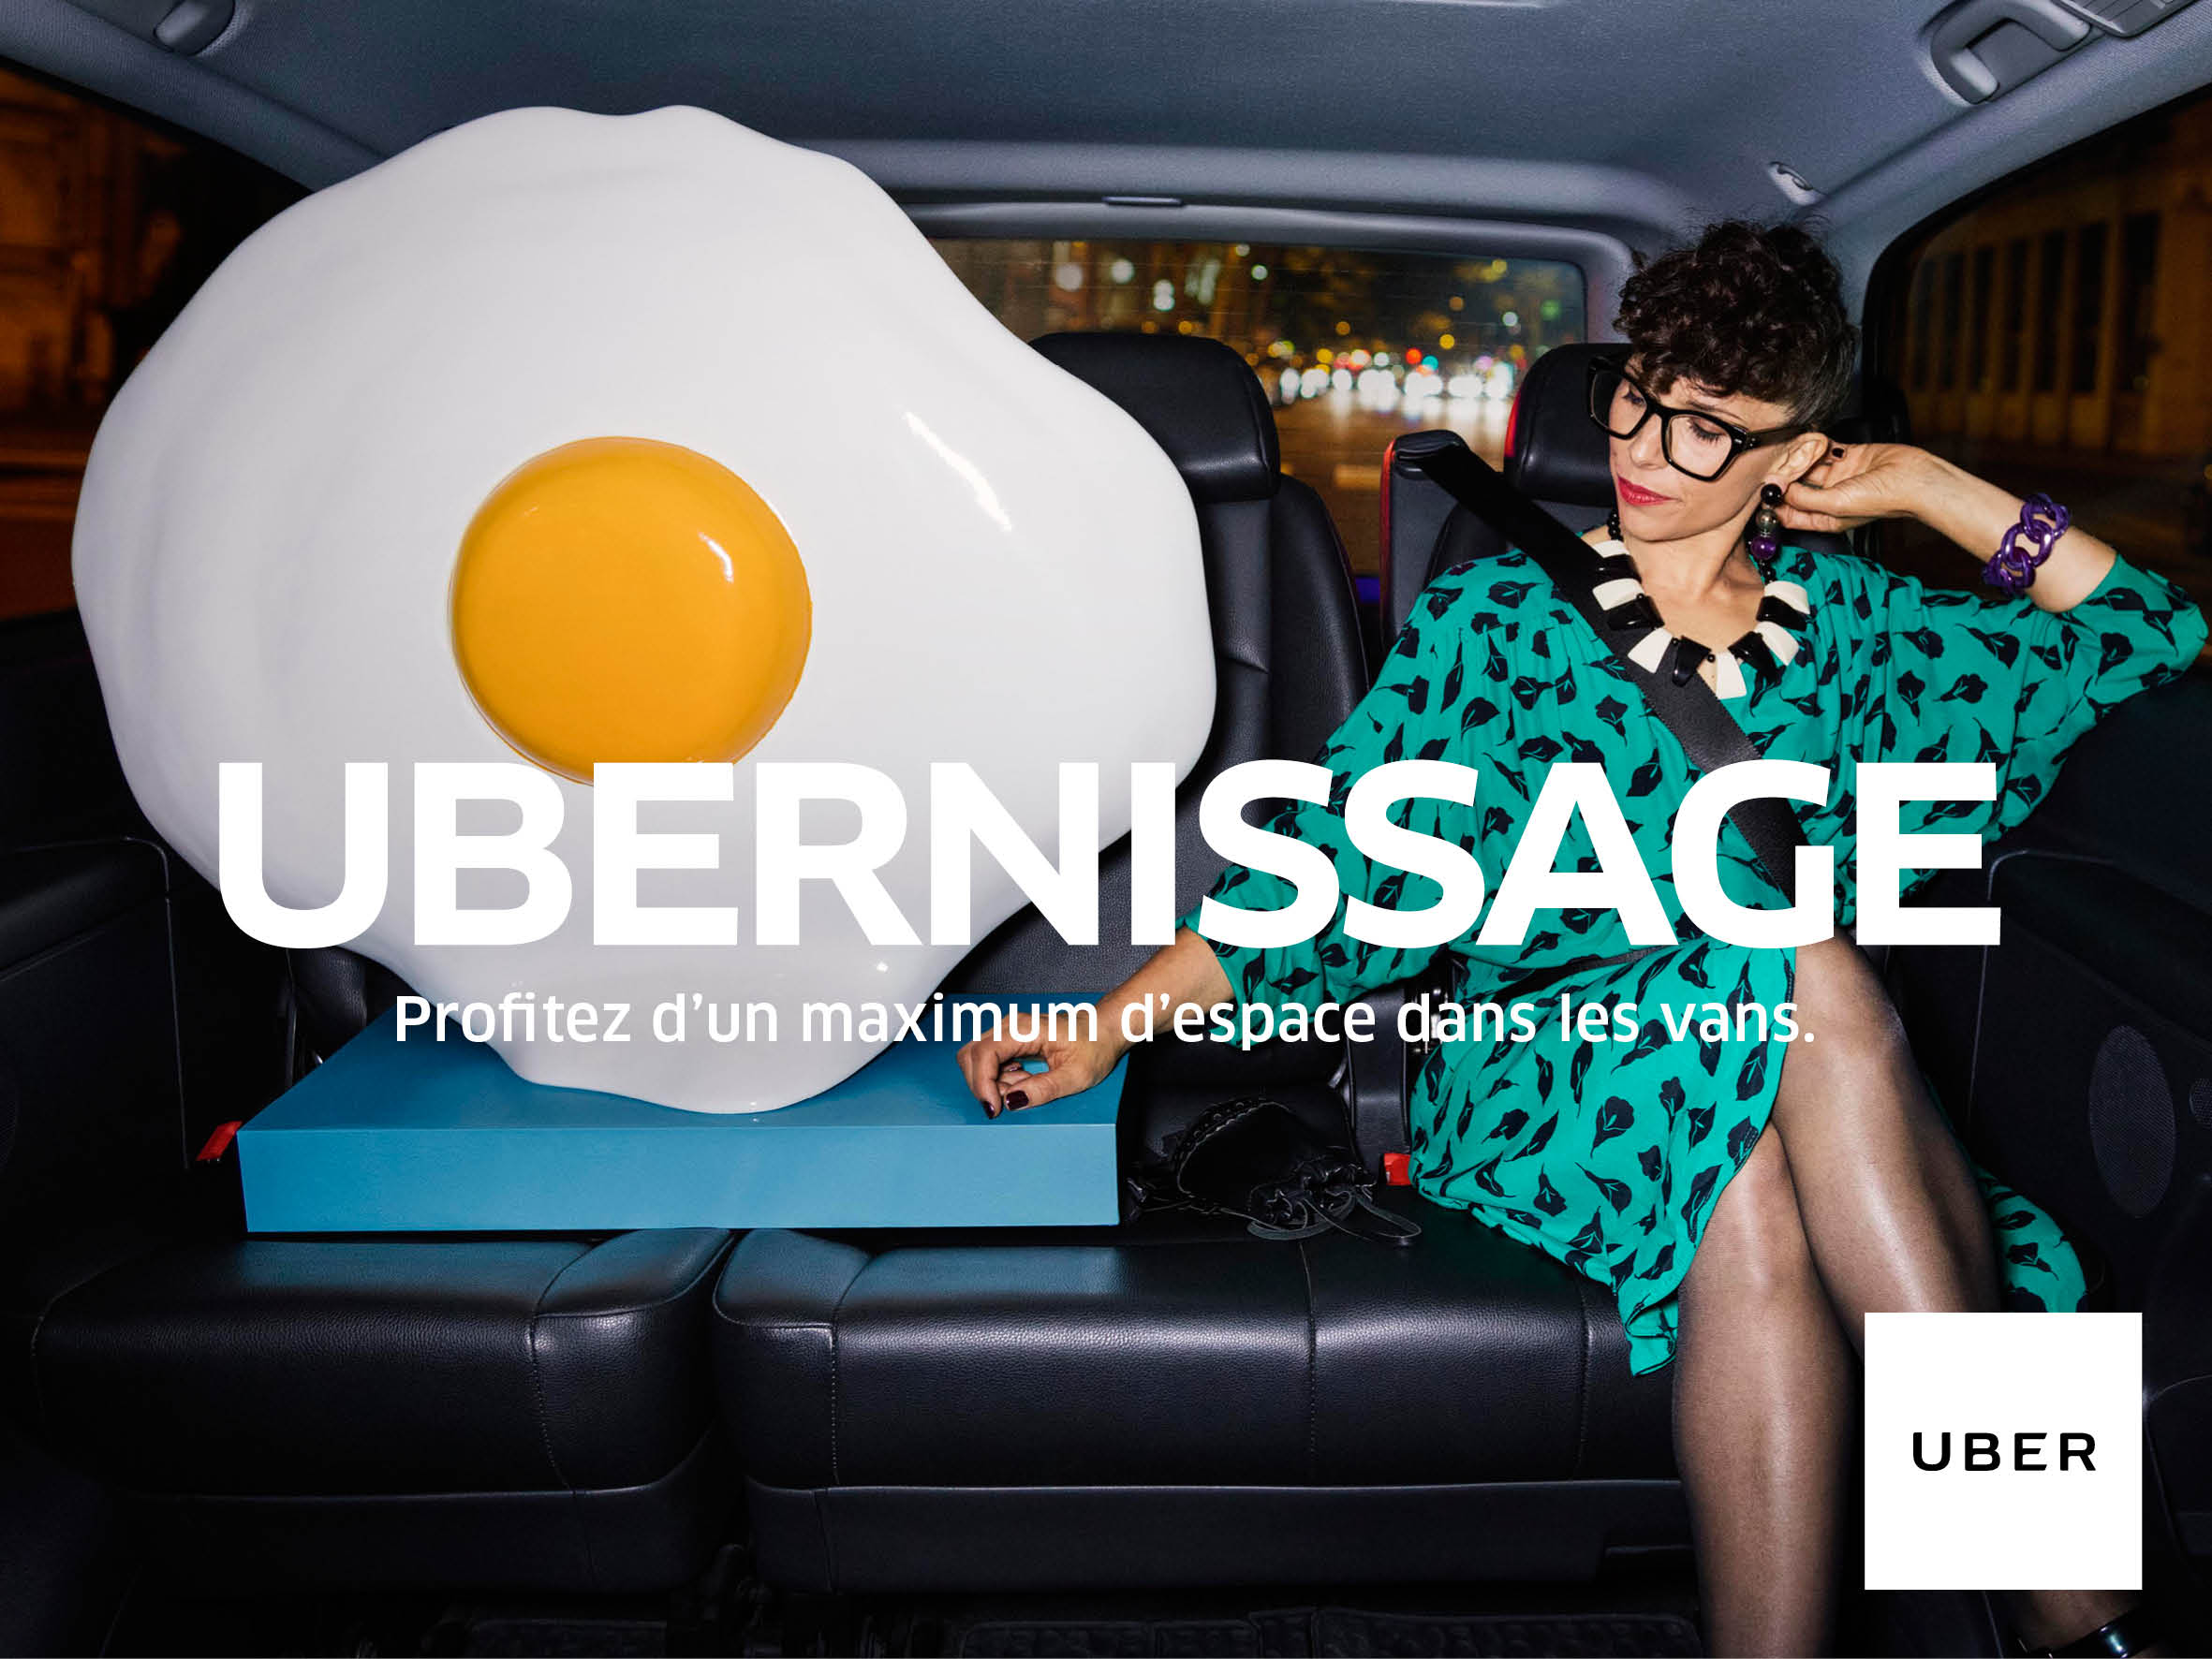 uber-france-publicite-marketing-application-utilisateurs-passagers-mars-2016-agence-marcel-publicis-9